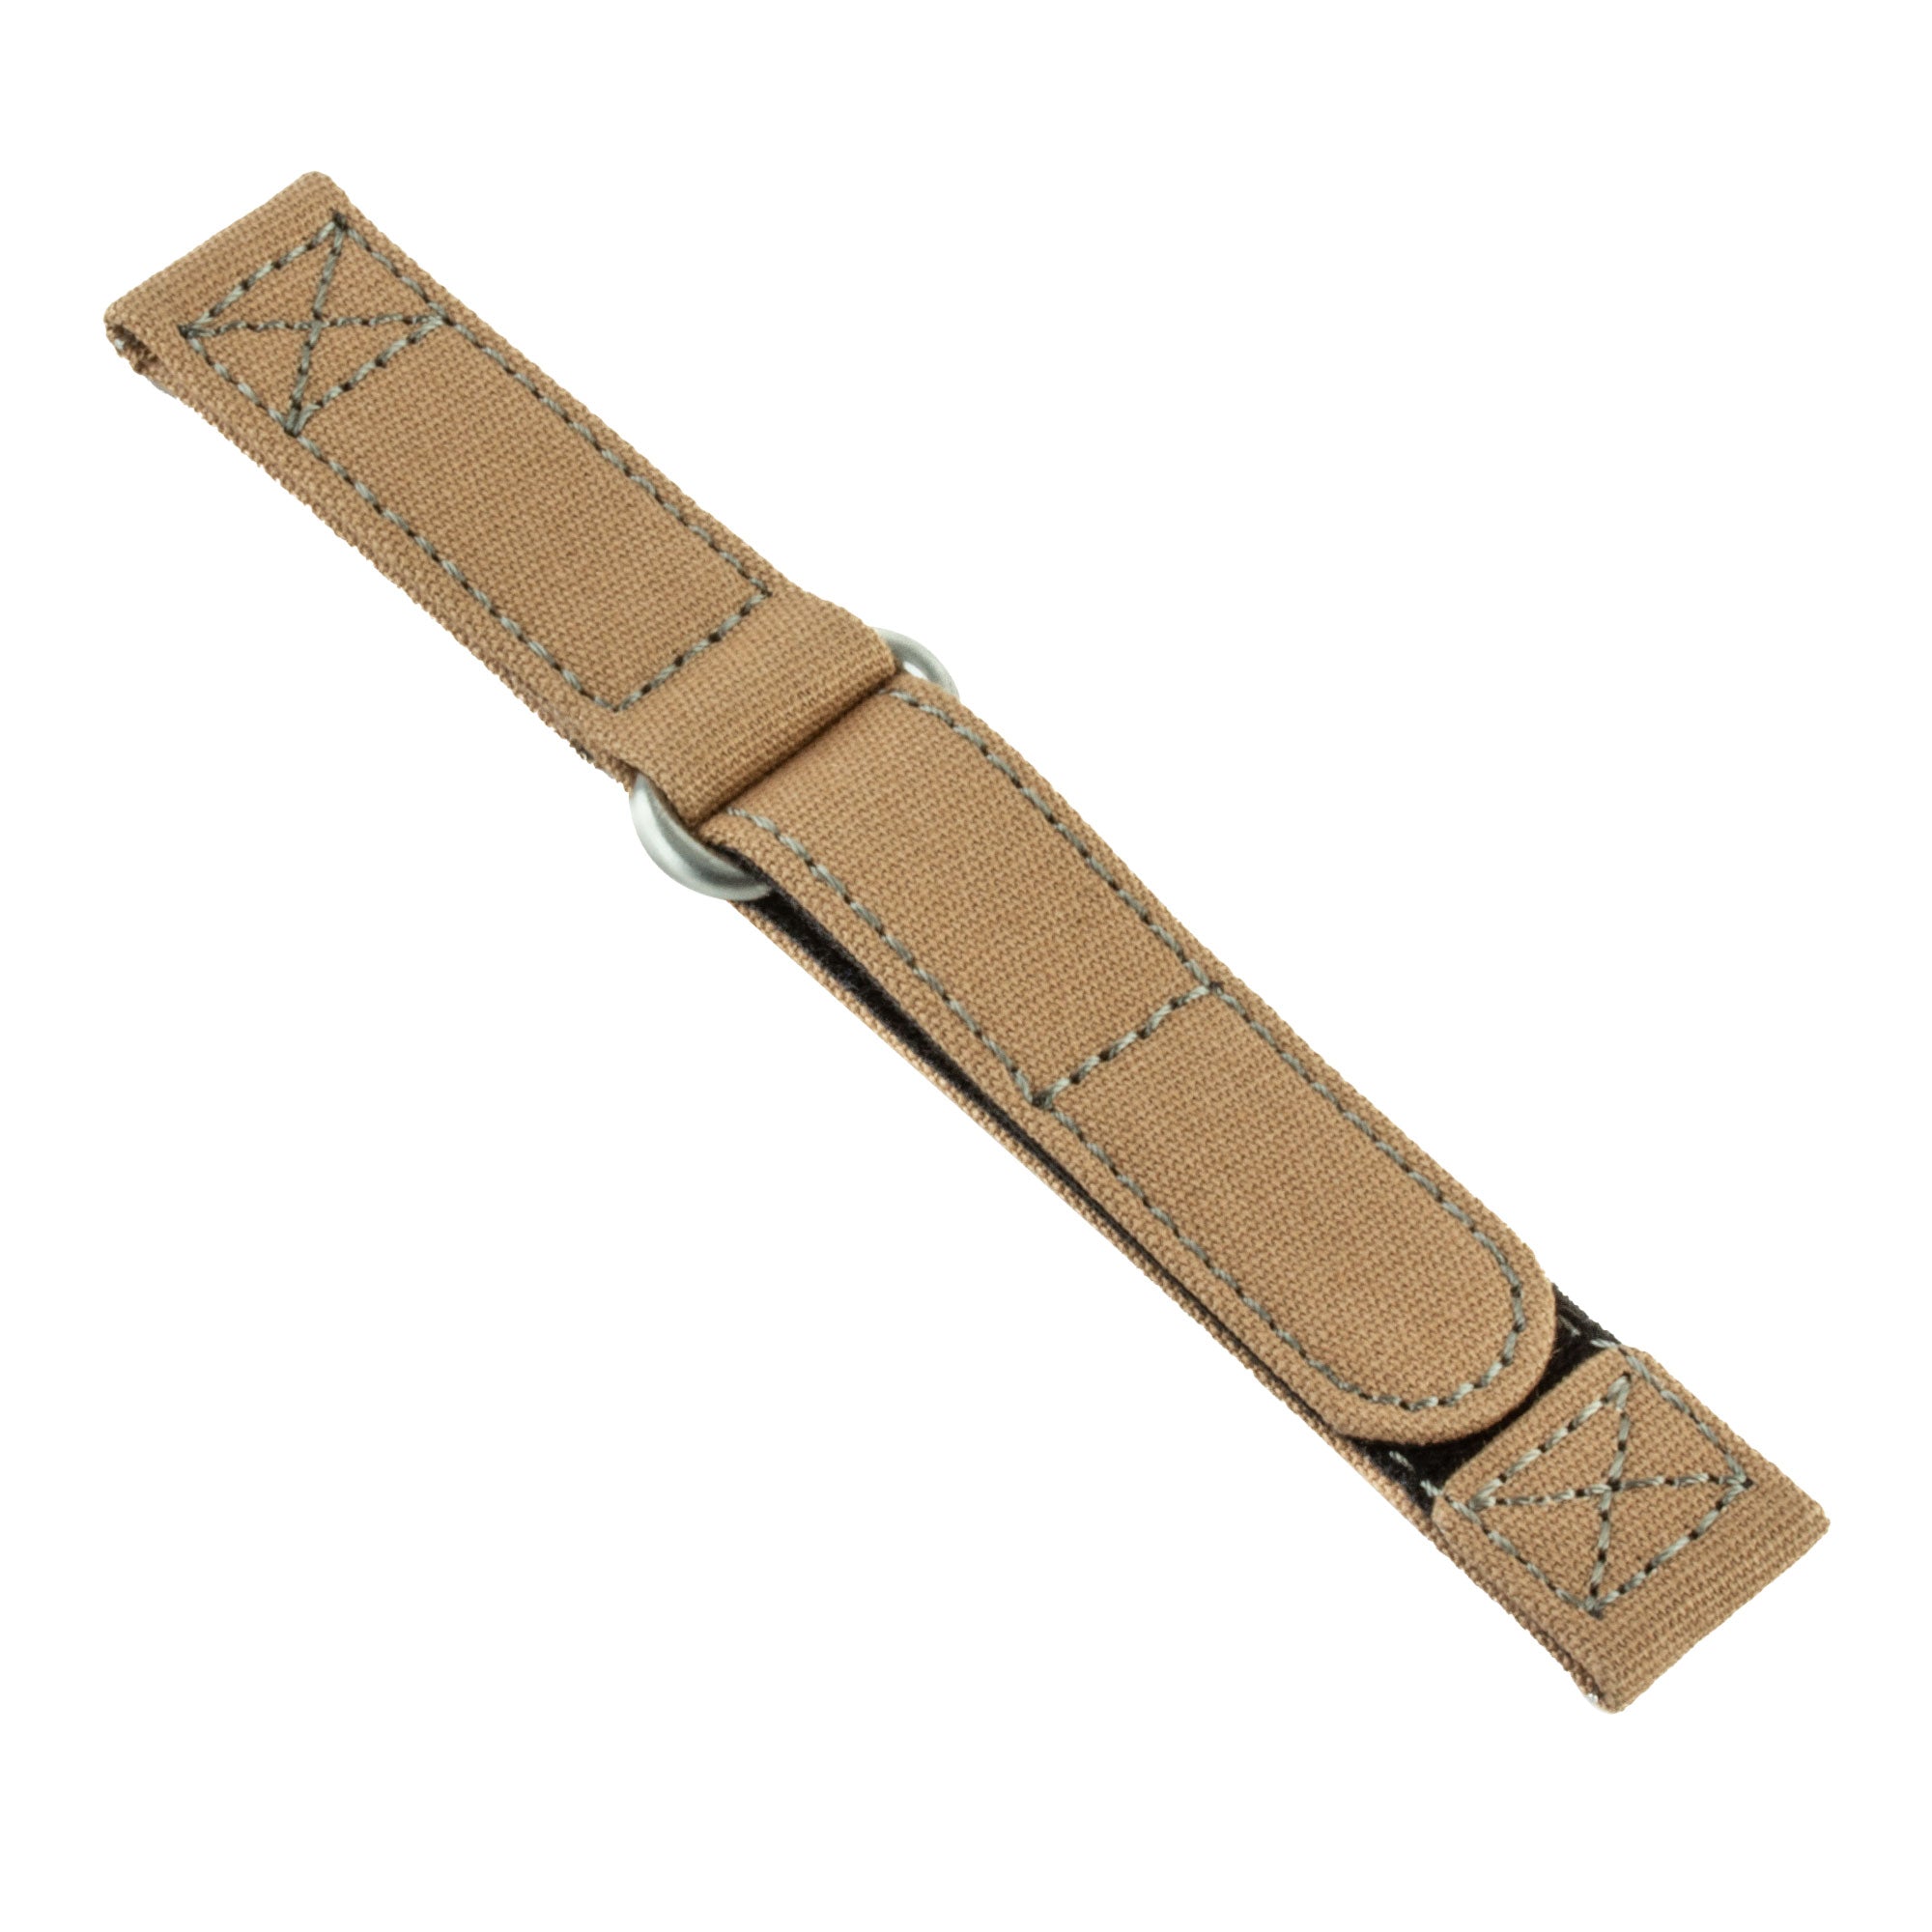 Velcro leather watch band - Nylon / Fabric